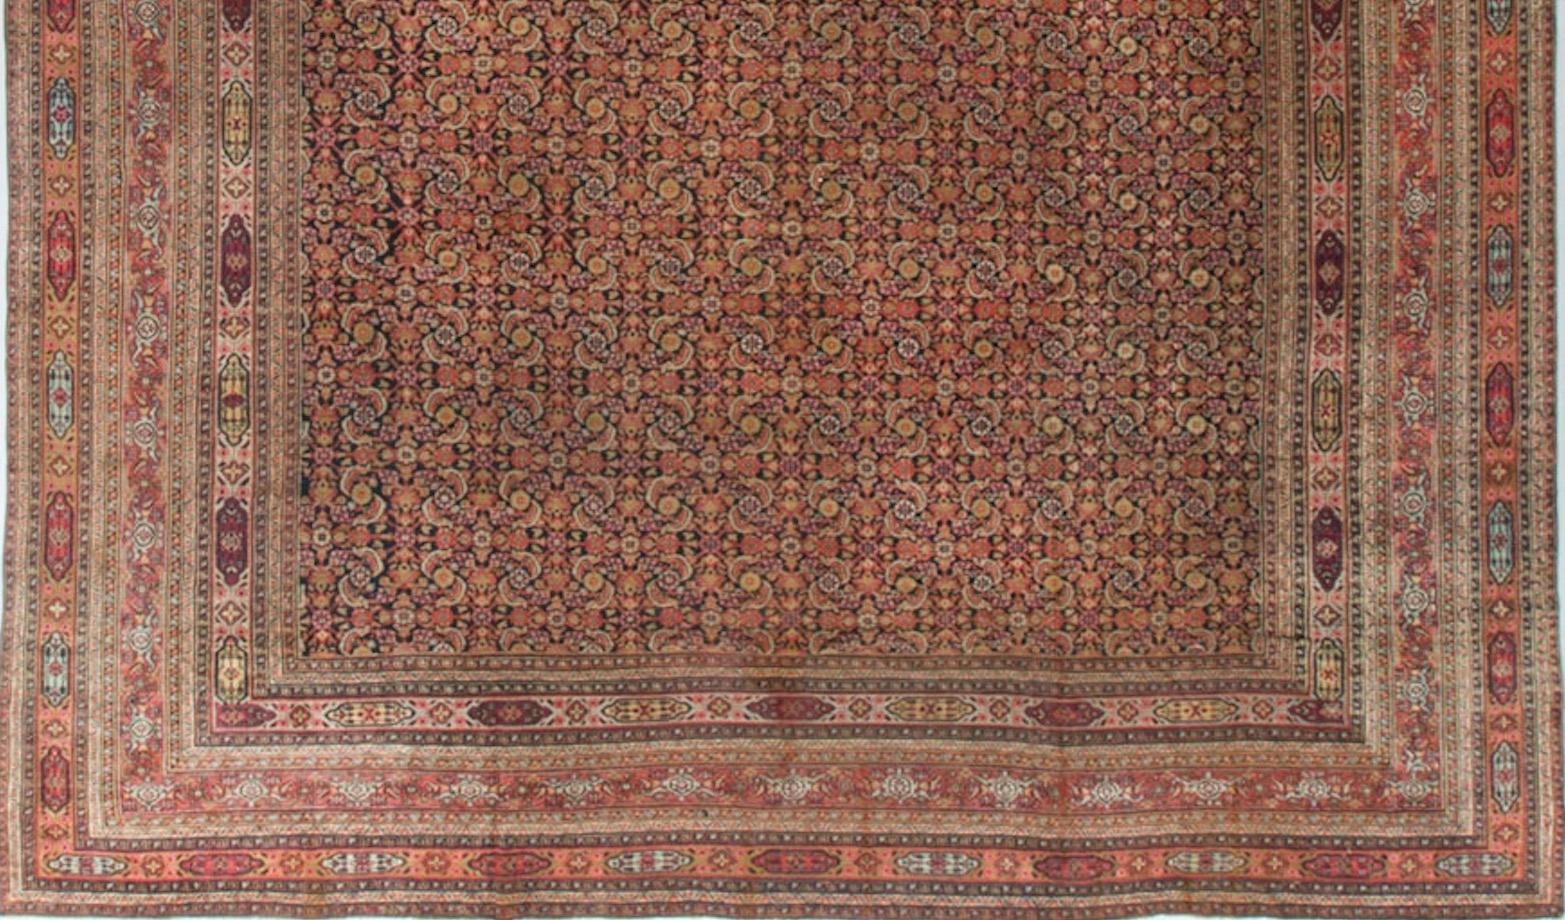 Early 20th Century Antique Persian Khorassan Rug, circa 1900 14'0 x 16'10